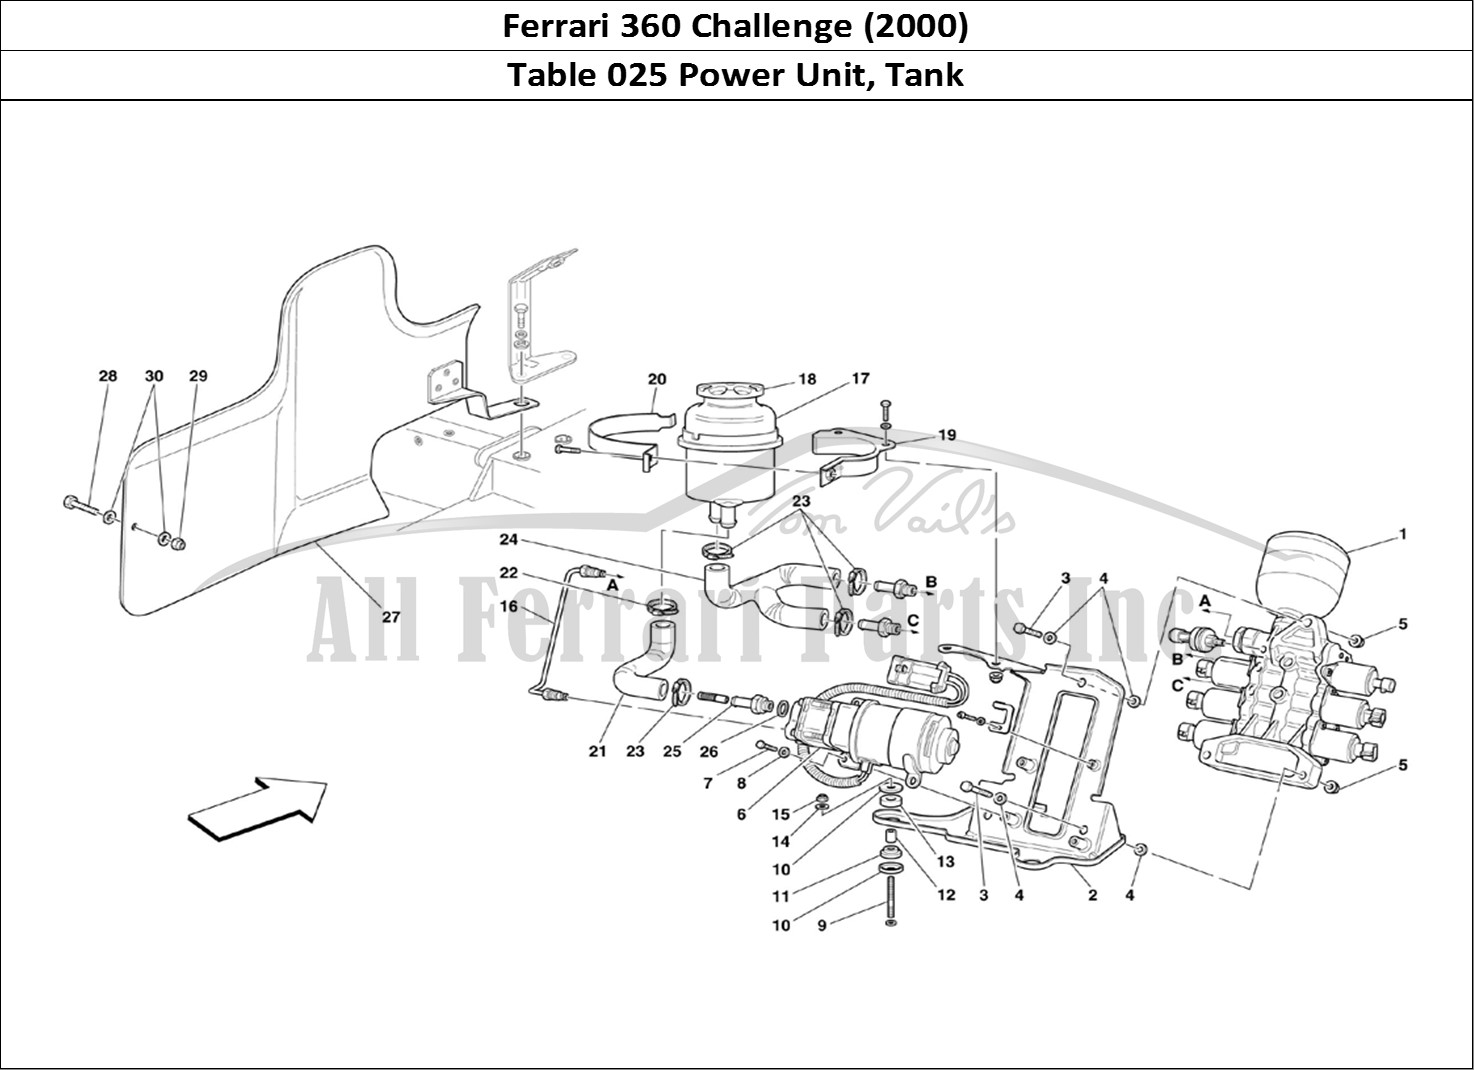 Ferrari Parts Ferrari 360 Challenge (2000) Page 025 Power Unit and Tank